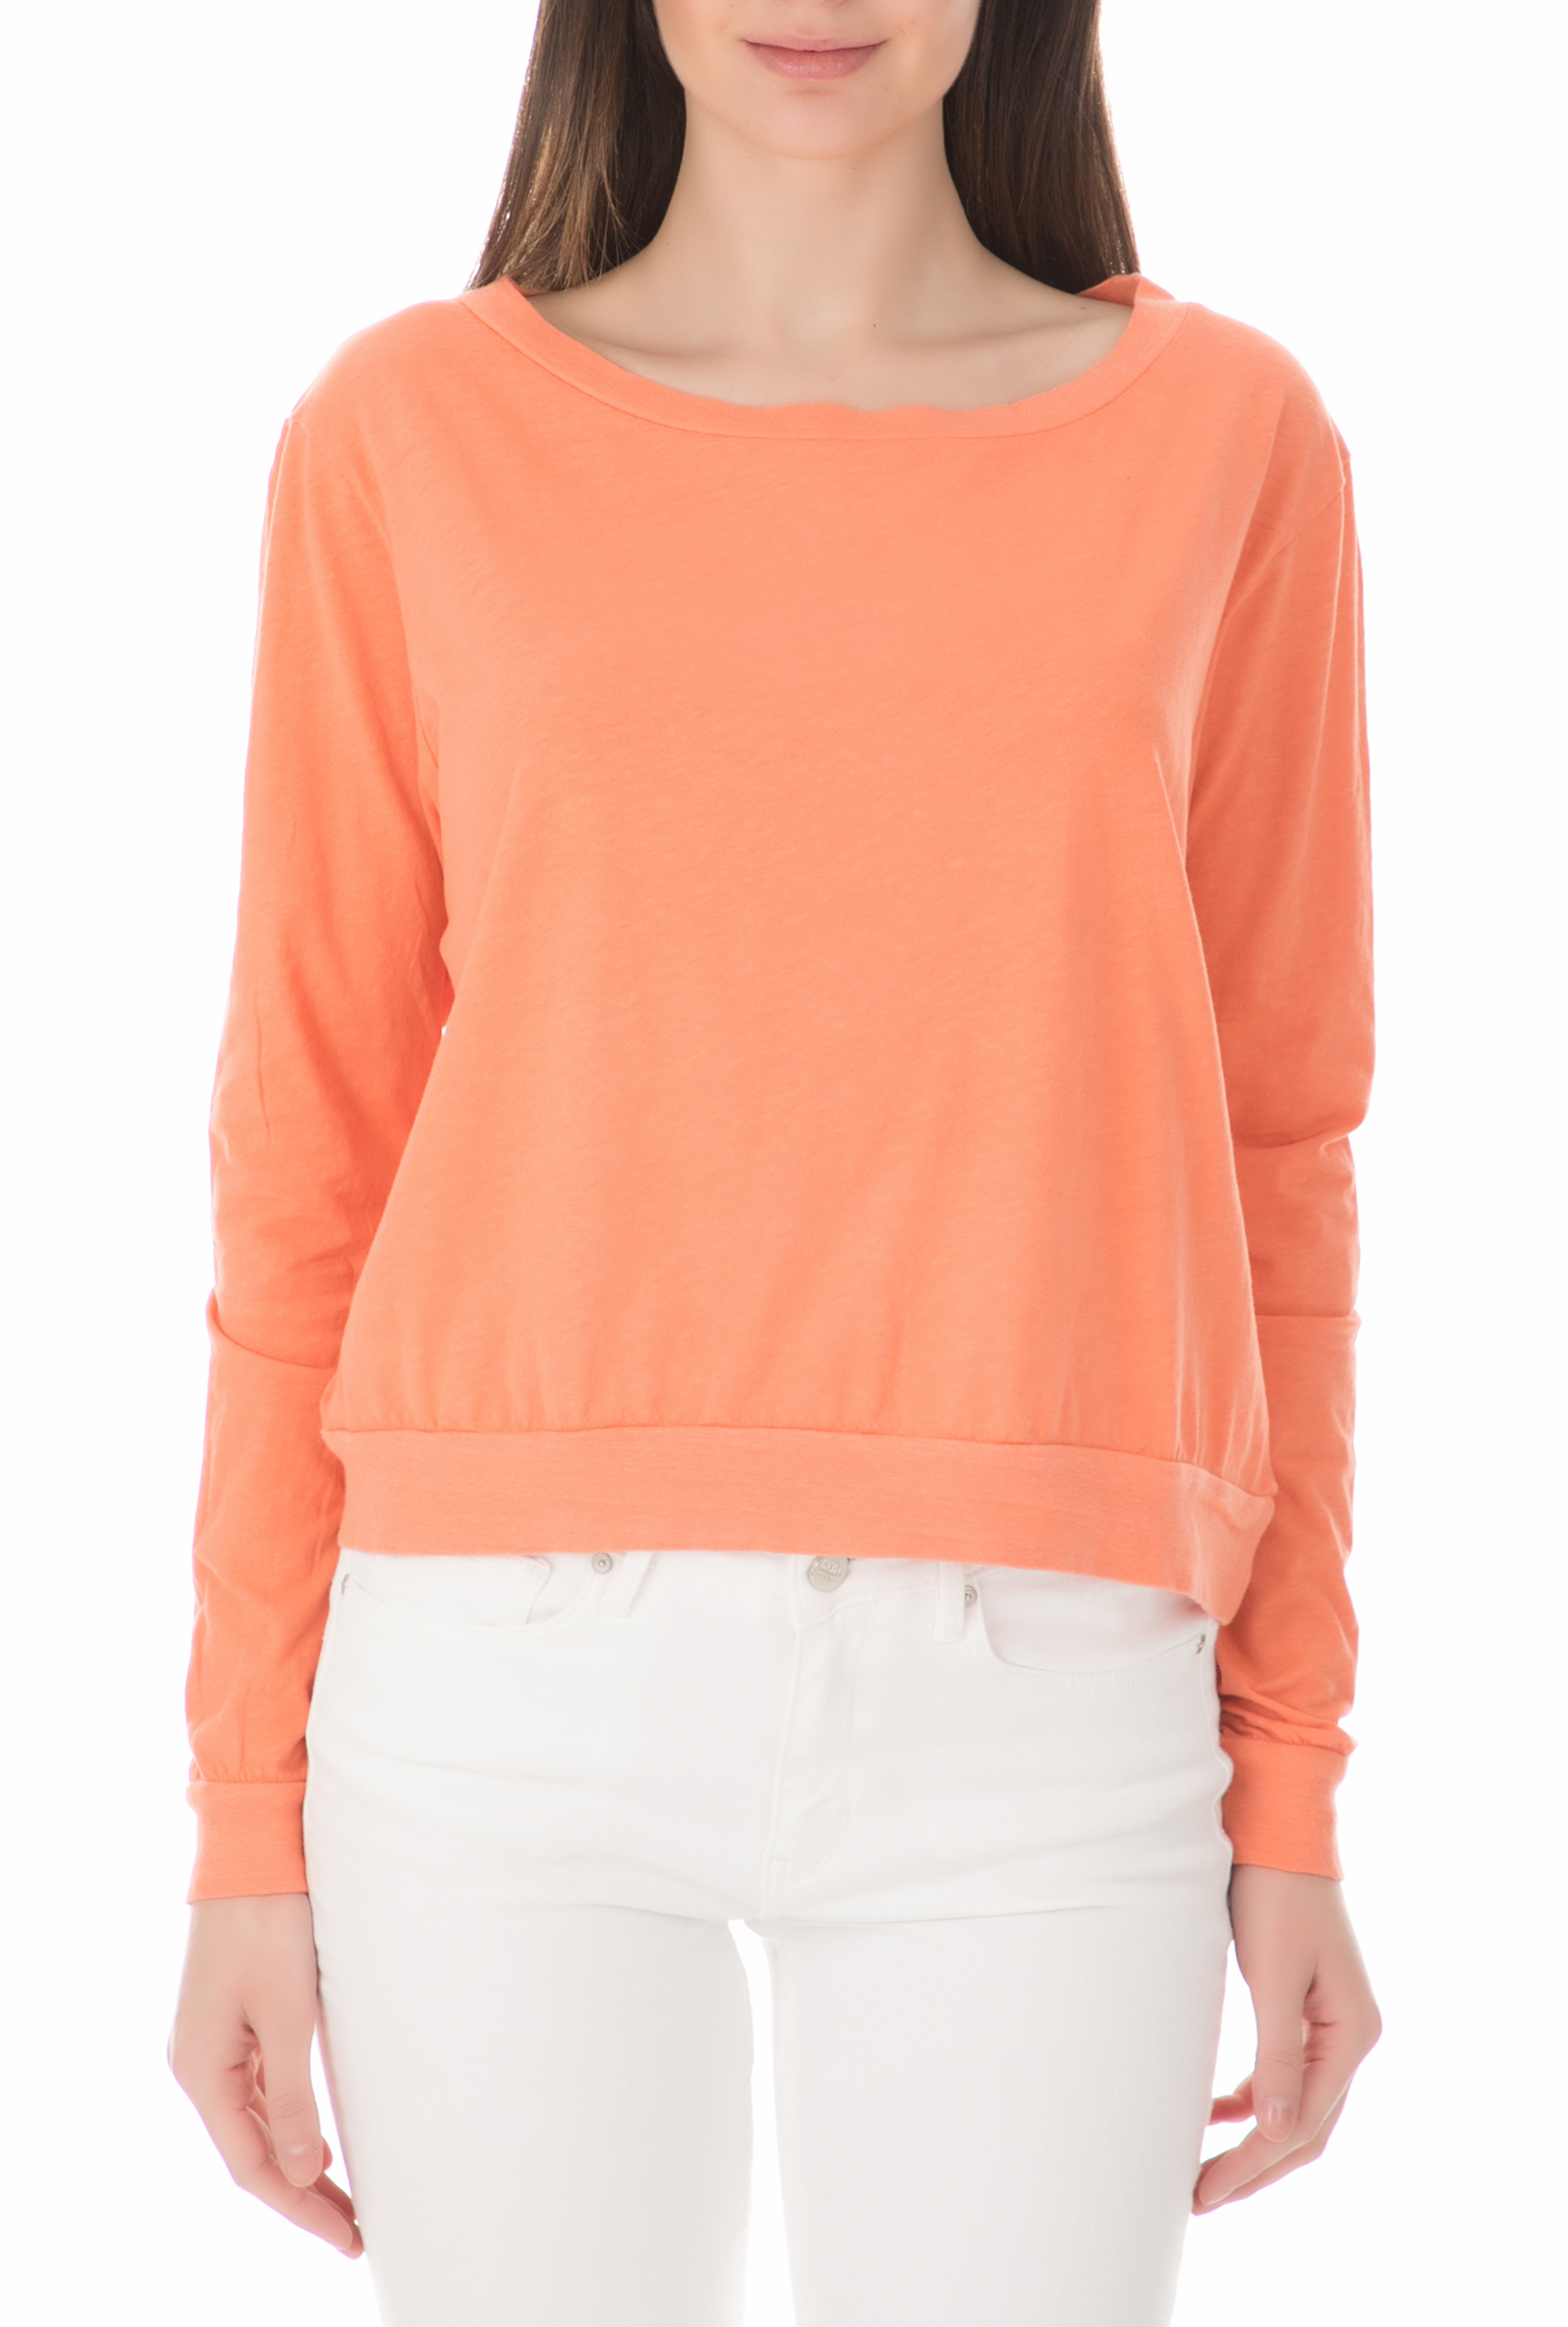 AMERICAN VINTAGE - Γυναικεία μπλούζα REIKO πορτοκαλί Γυναικεία/Ρούχα/Μπλούζες/Μακρυμάνικες